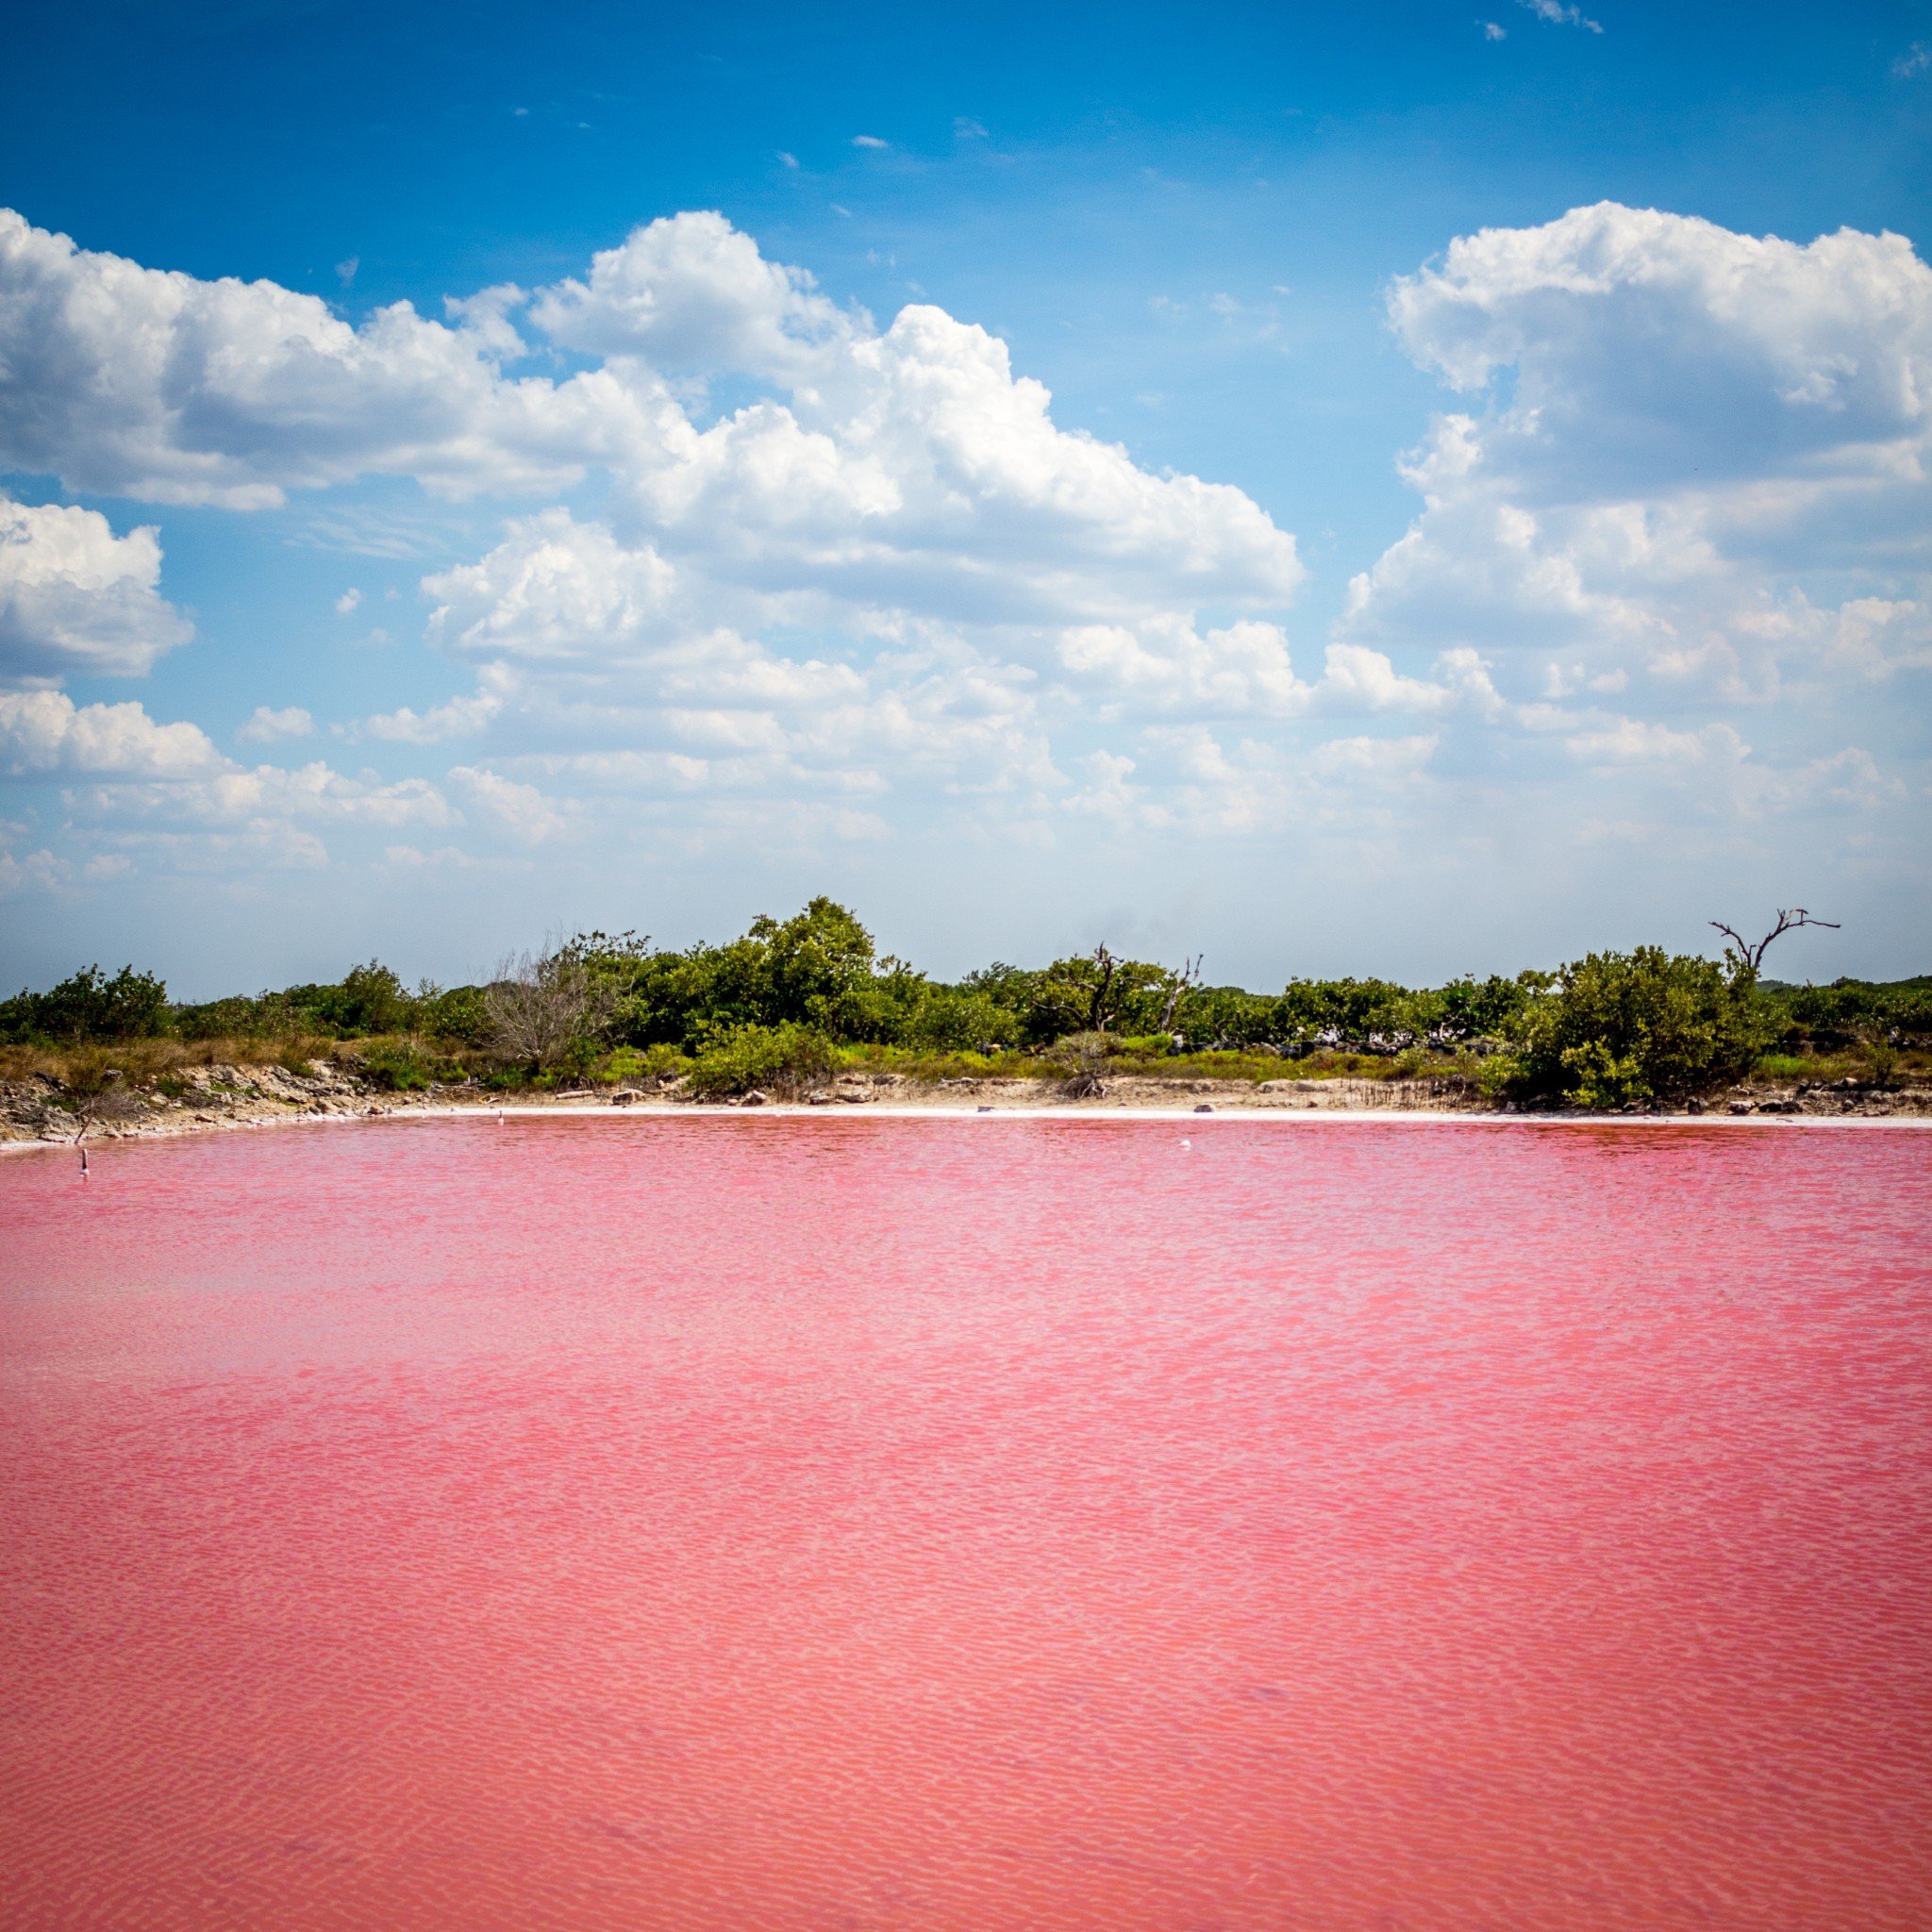 Есть розовое озеро. Озеро Ретба Сенегал. Розовое озеро Хиллер Австралия. Озеро Хиллер (остров Миддл). Розовое озеро Ретба.